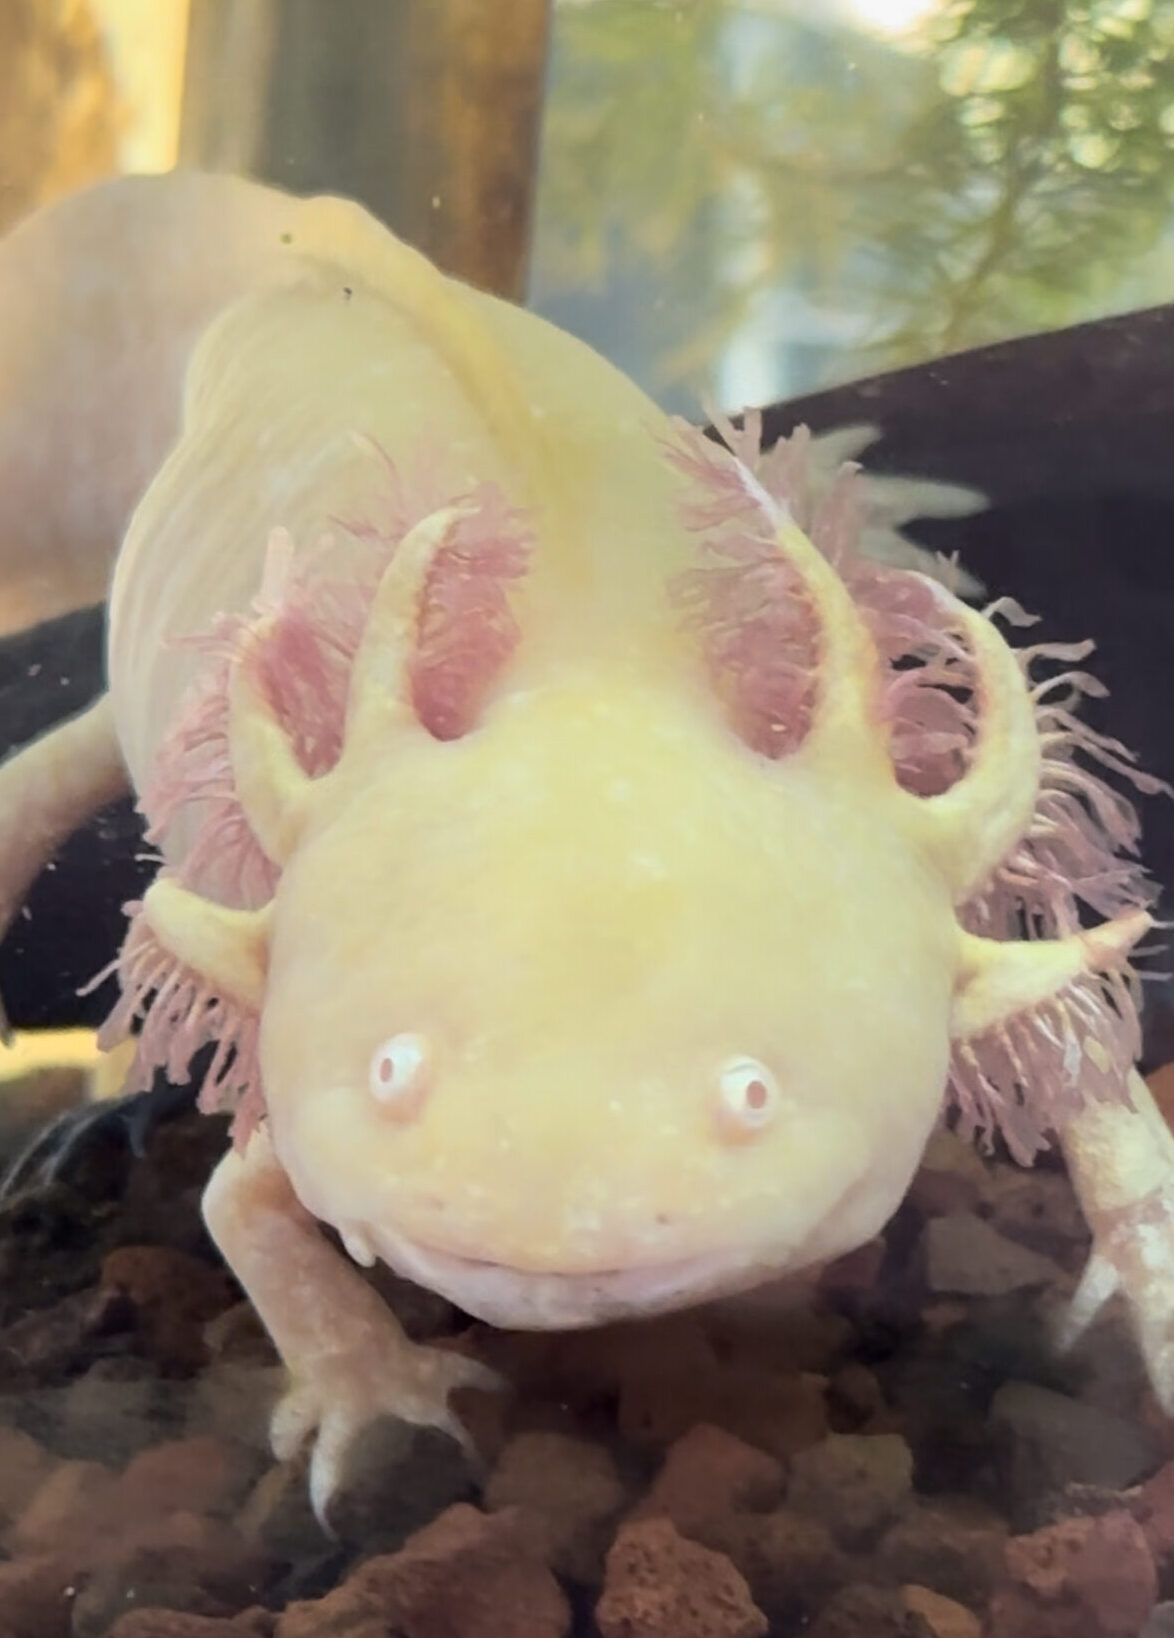 An axolotl, yellow and orange, looks at the camera.